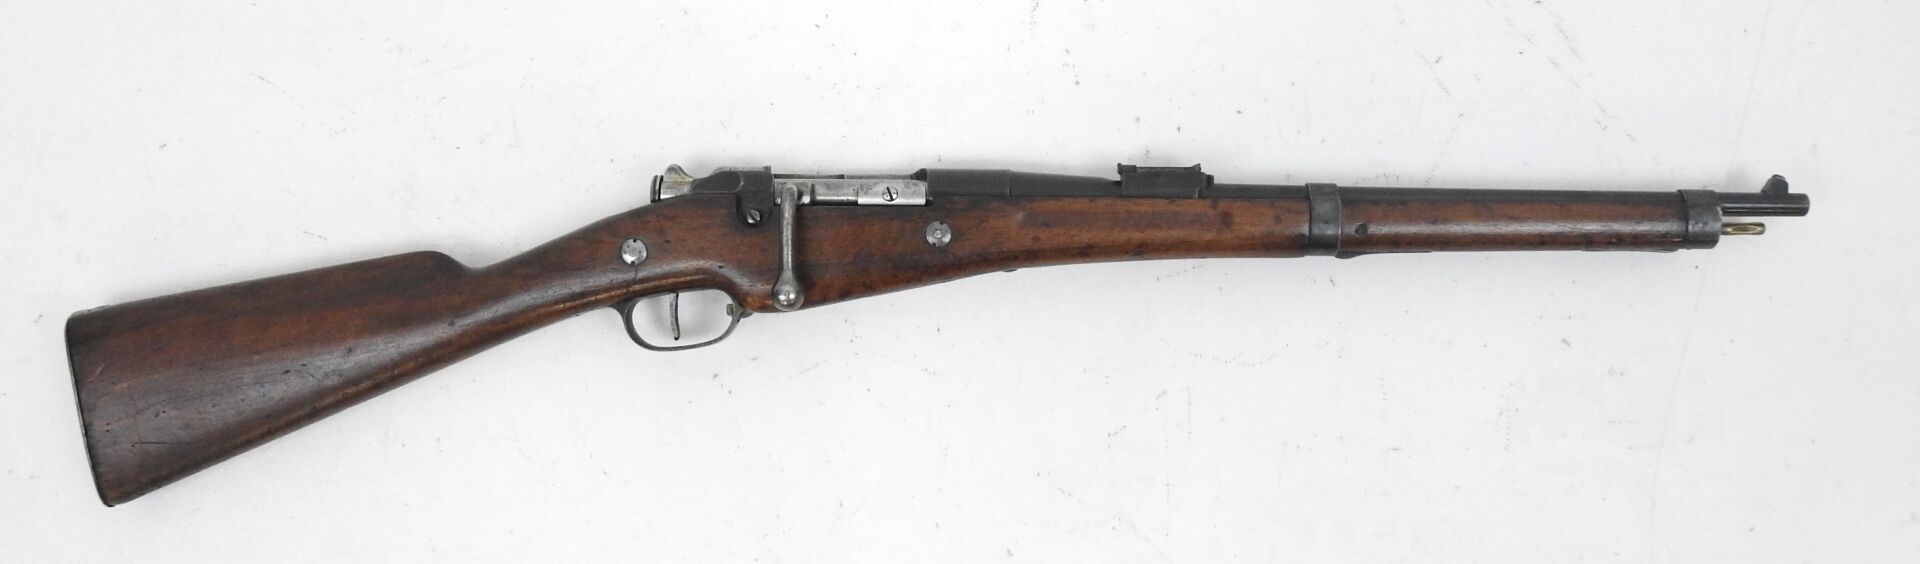 Null 法国。 1890型骑兵步枪，胡桃木枪架，后座标有 "St-Etienne mle 1890 MAS 1892"，单片机编号266，枪栓和木头都有相同的&hellip;